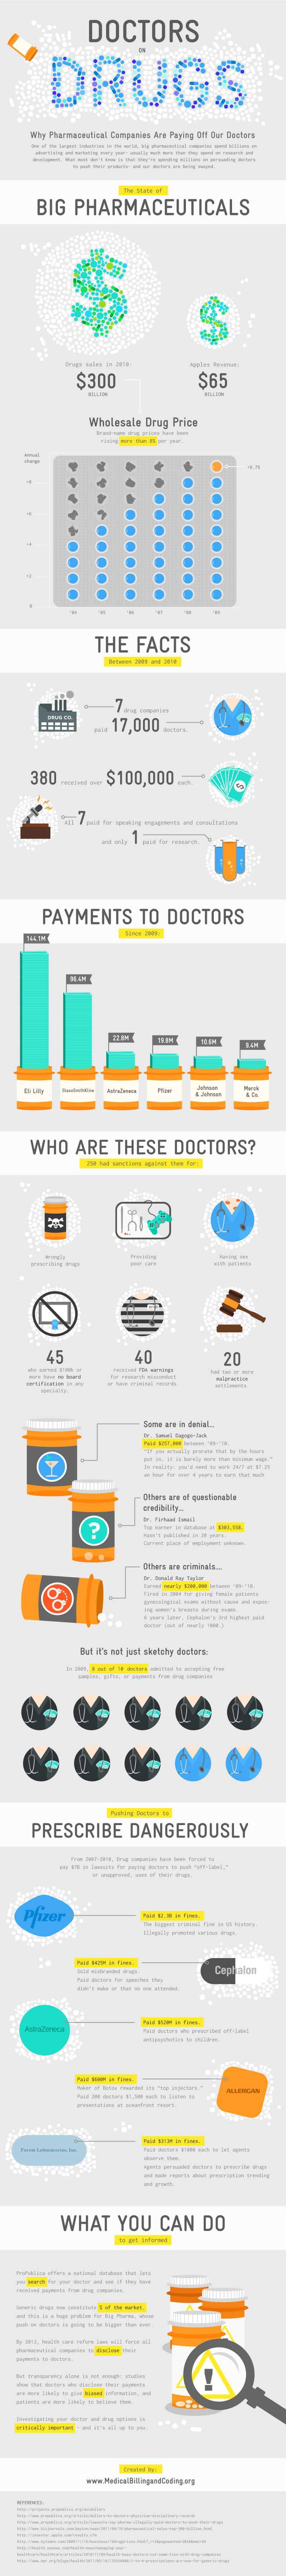 Doctors on drugs